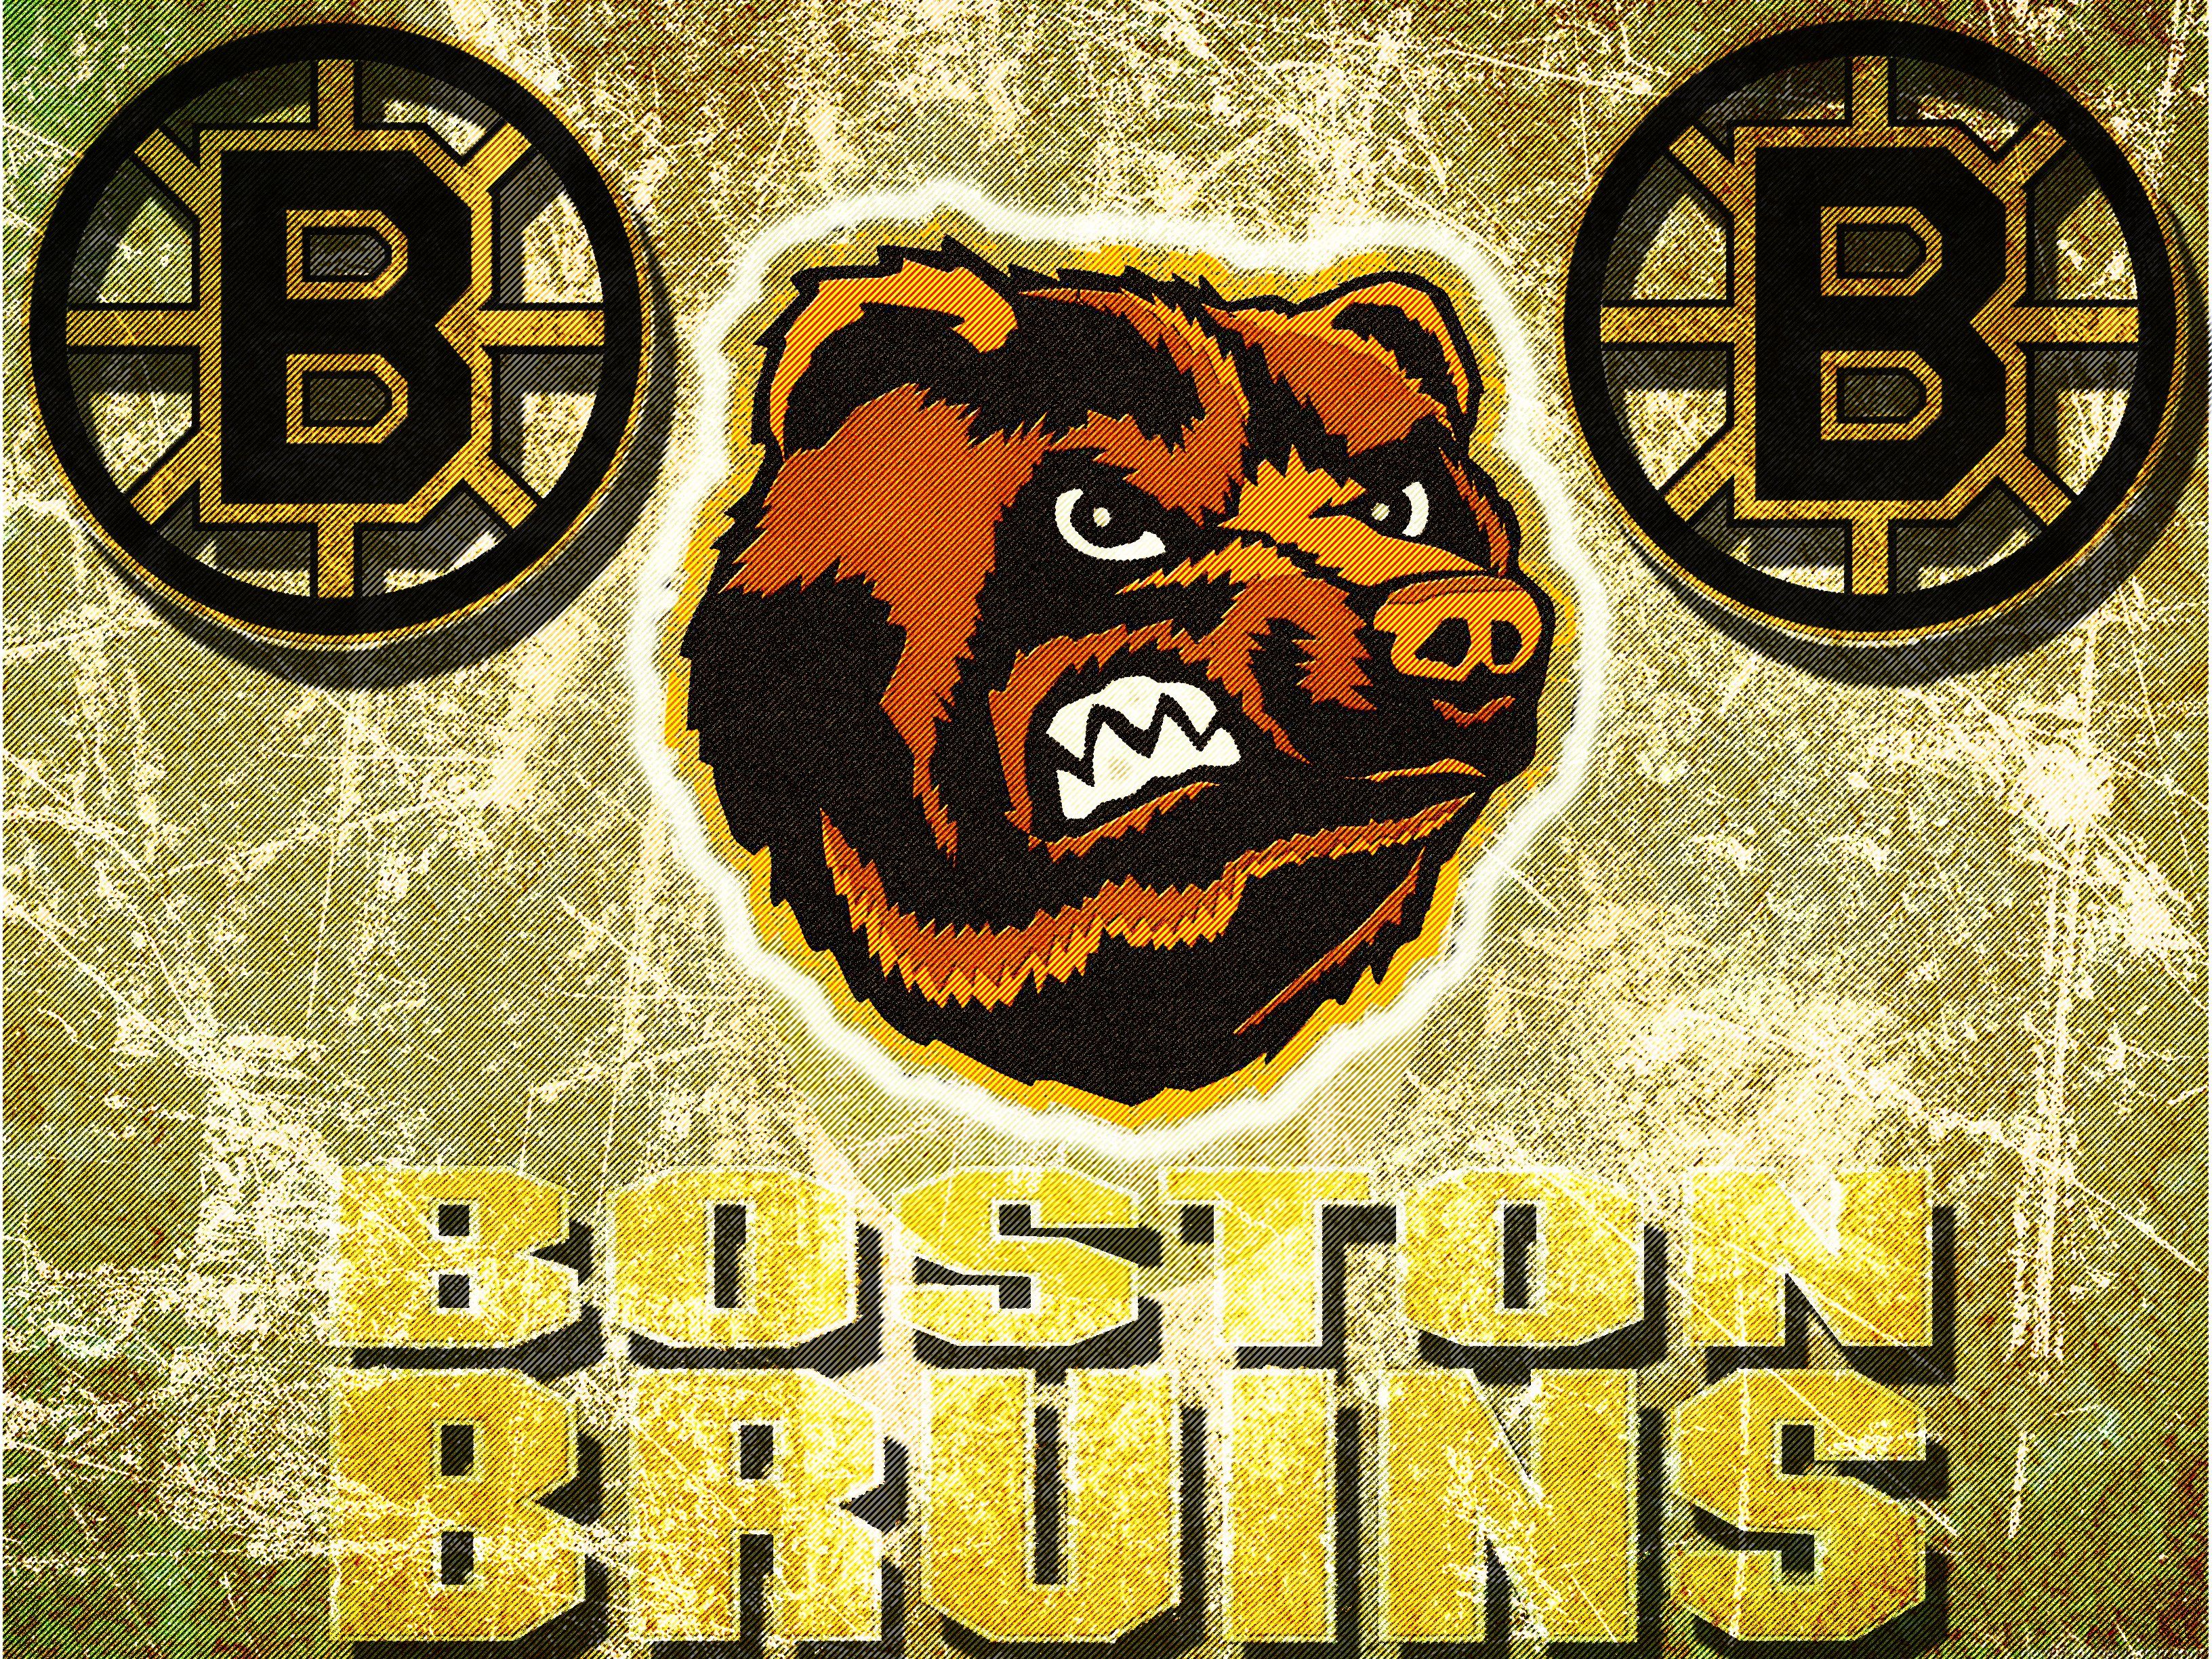 BOSTON BRUINS nhl hockey 33 wallpaper 3264x2448 336575